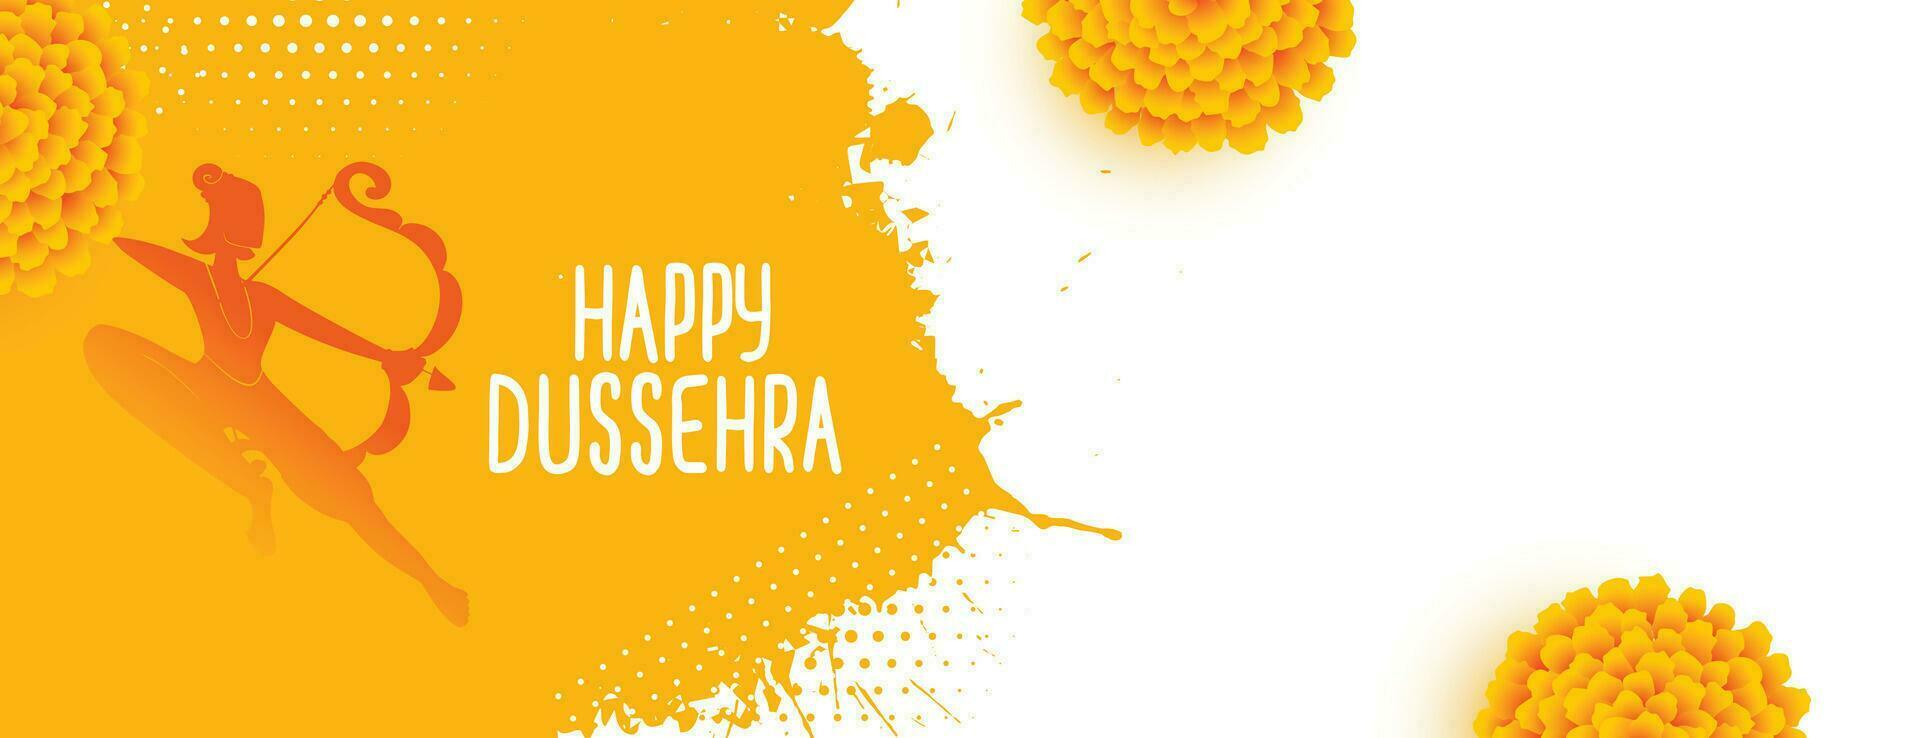 attractive happy dussehra traditional yellow banner vector